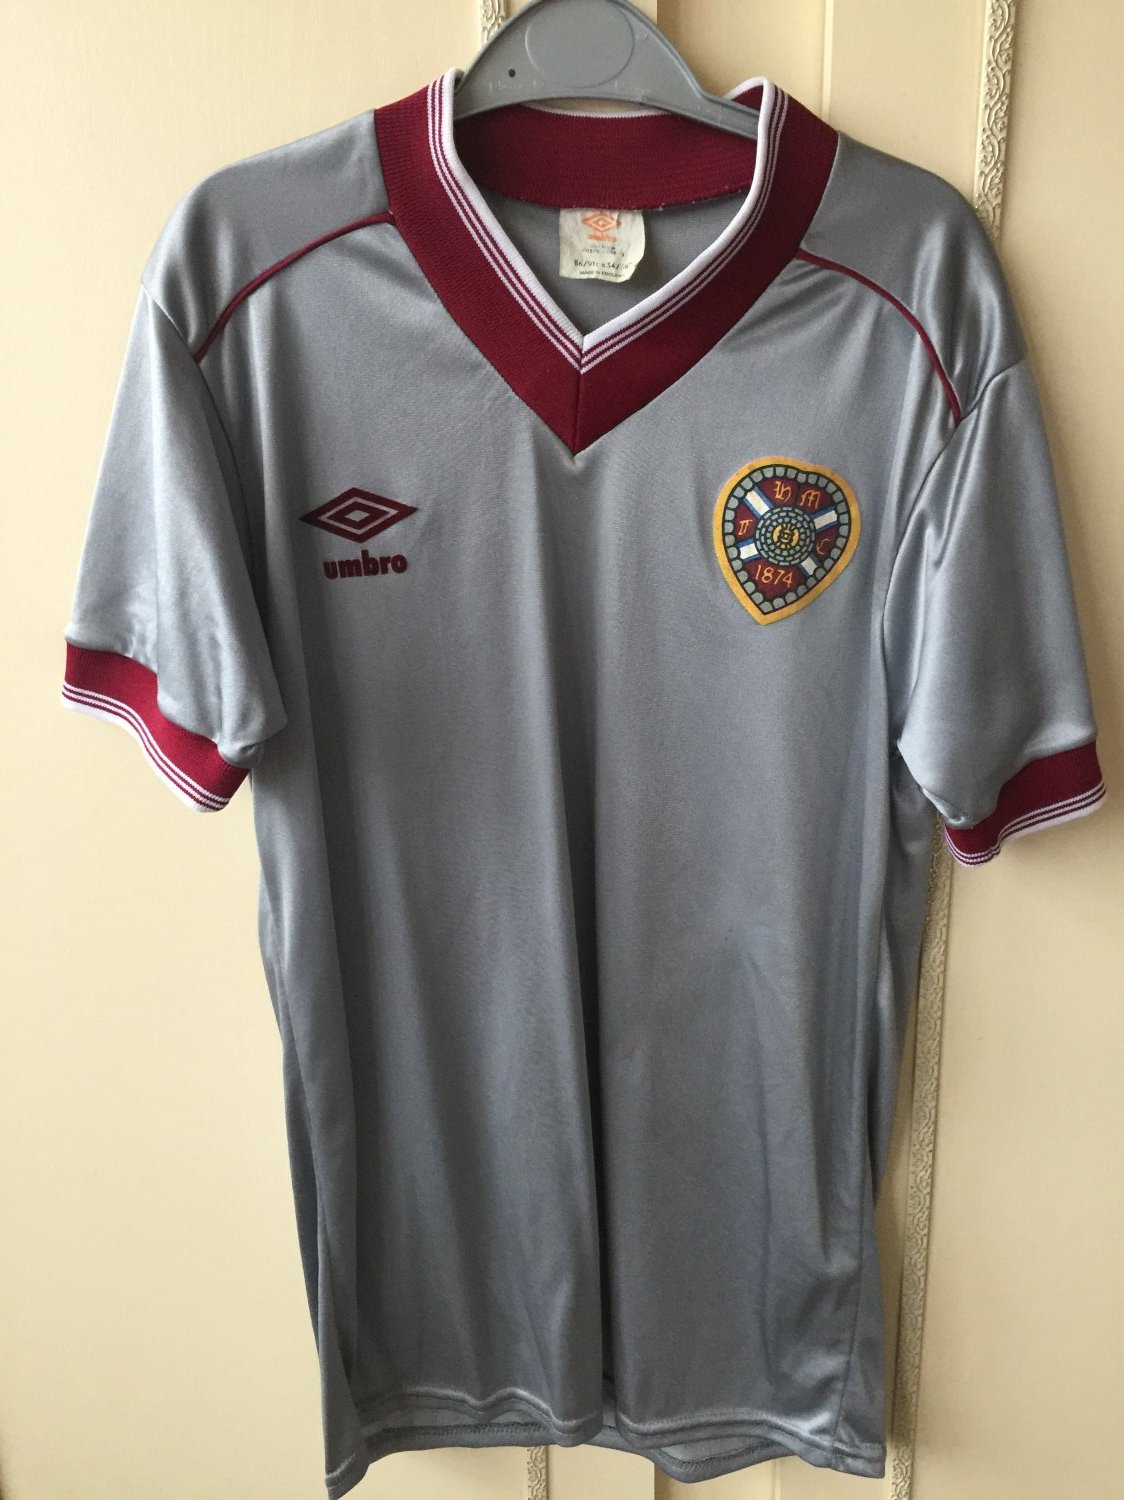 Heart Of Midlothian Away football shirt 1983 - 1986.